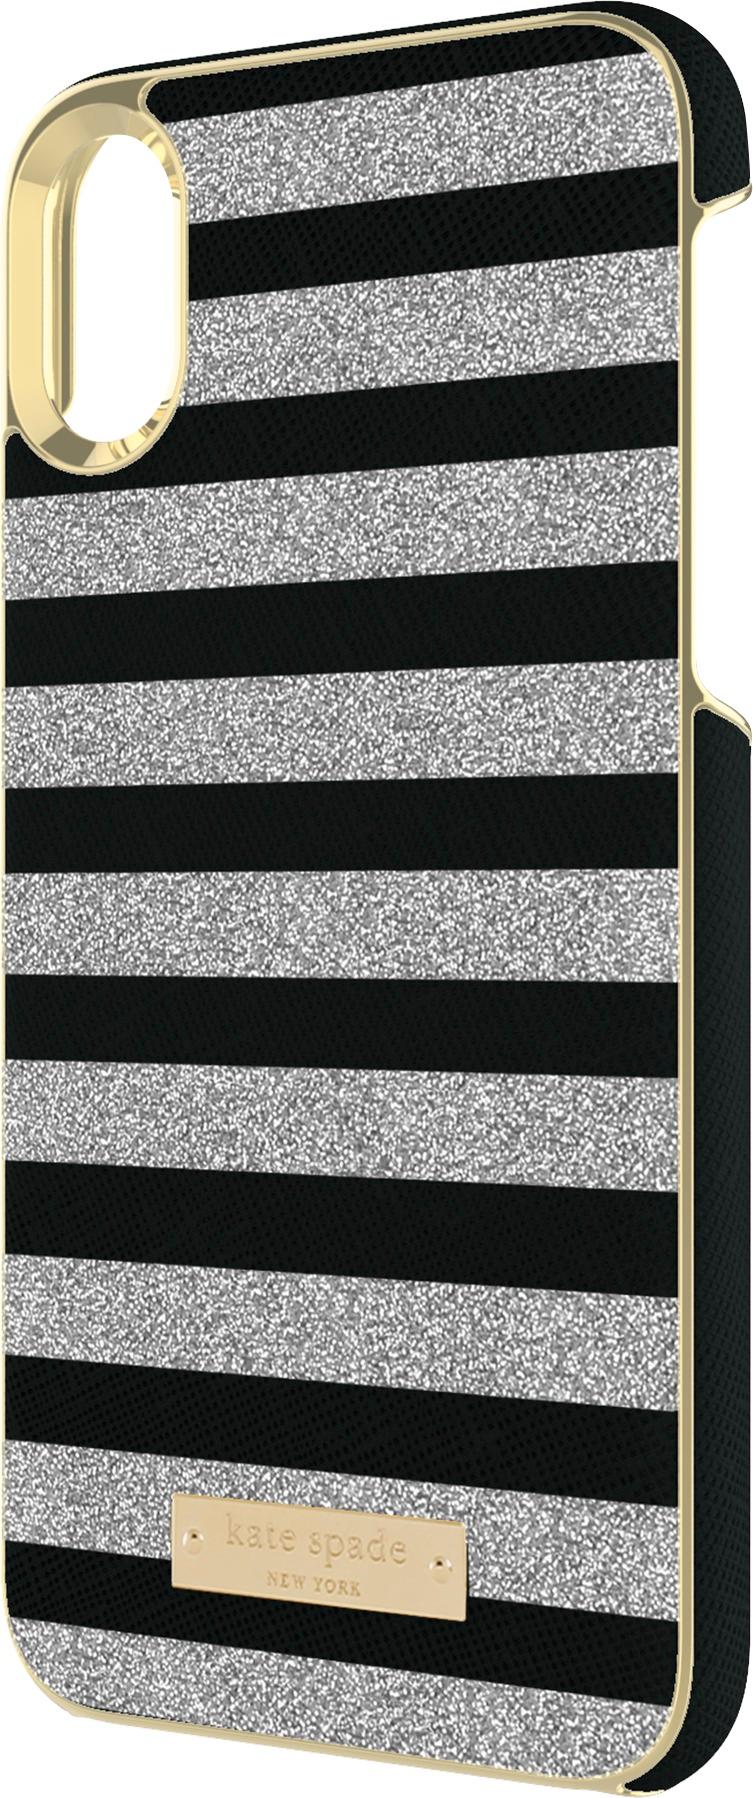 Best Buy: kate spade new york Case for Apple® iPhone® X and XS Glitter  silver/glitter stripe black saffiano KSIPH-081-BSSG